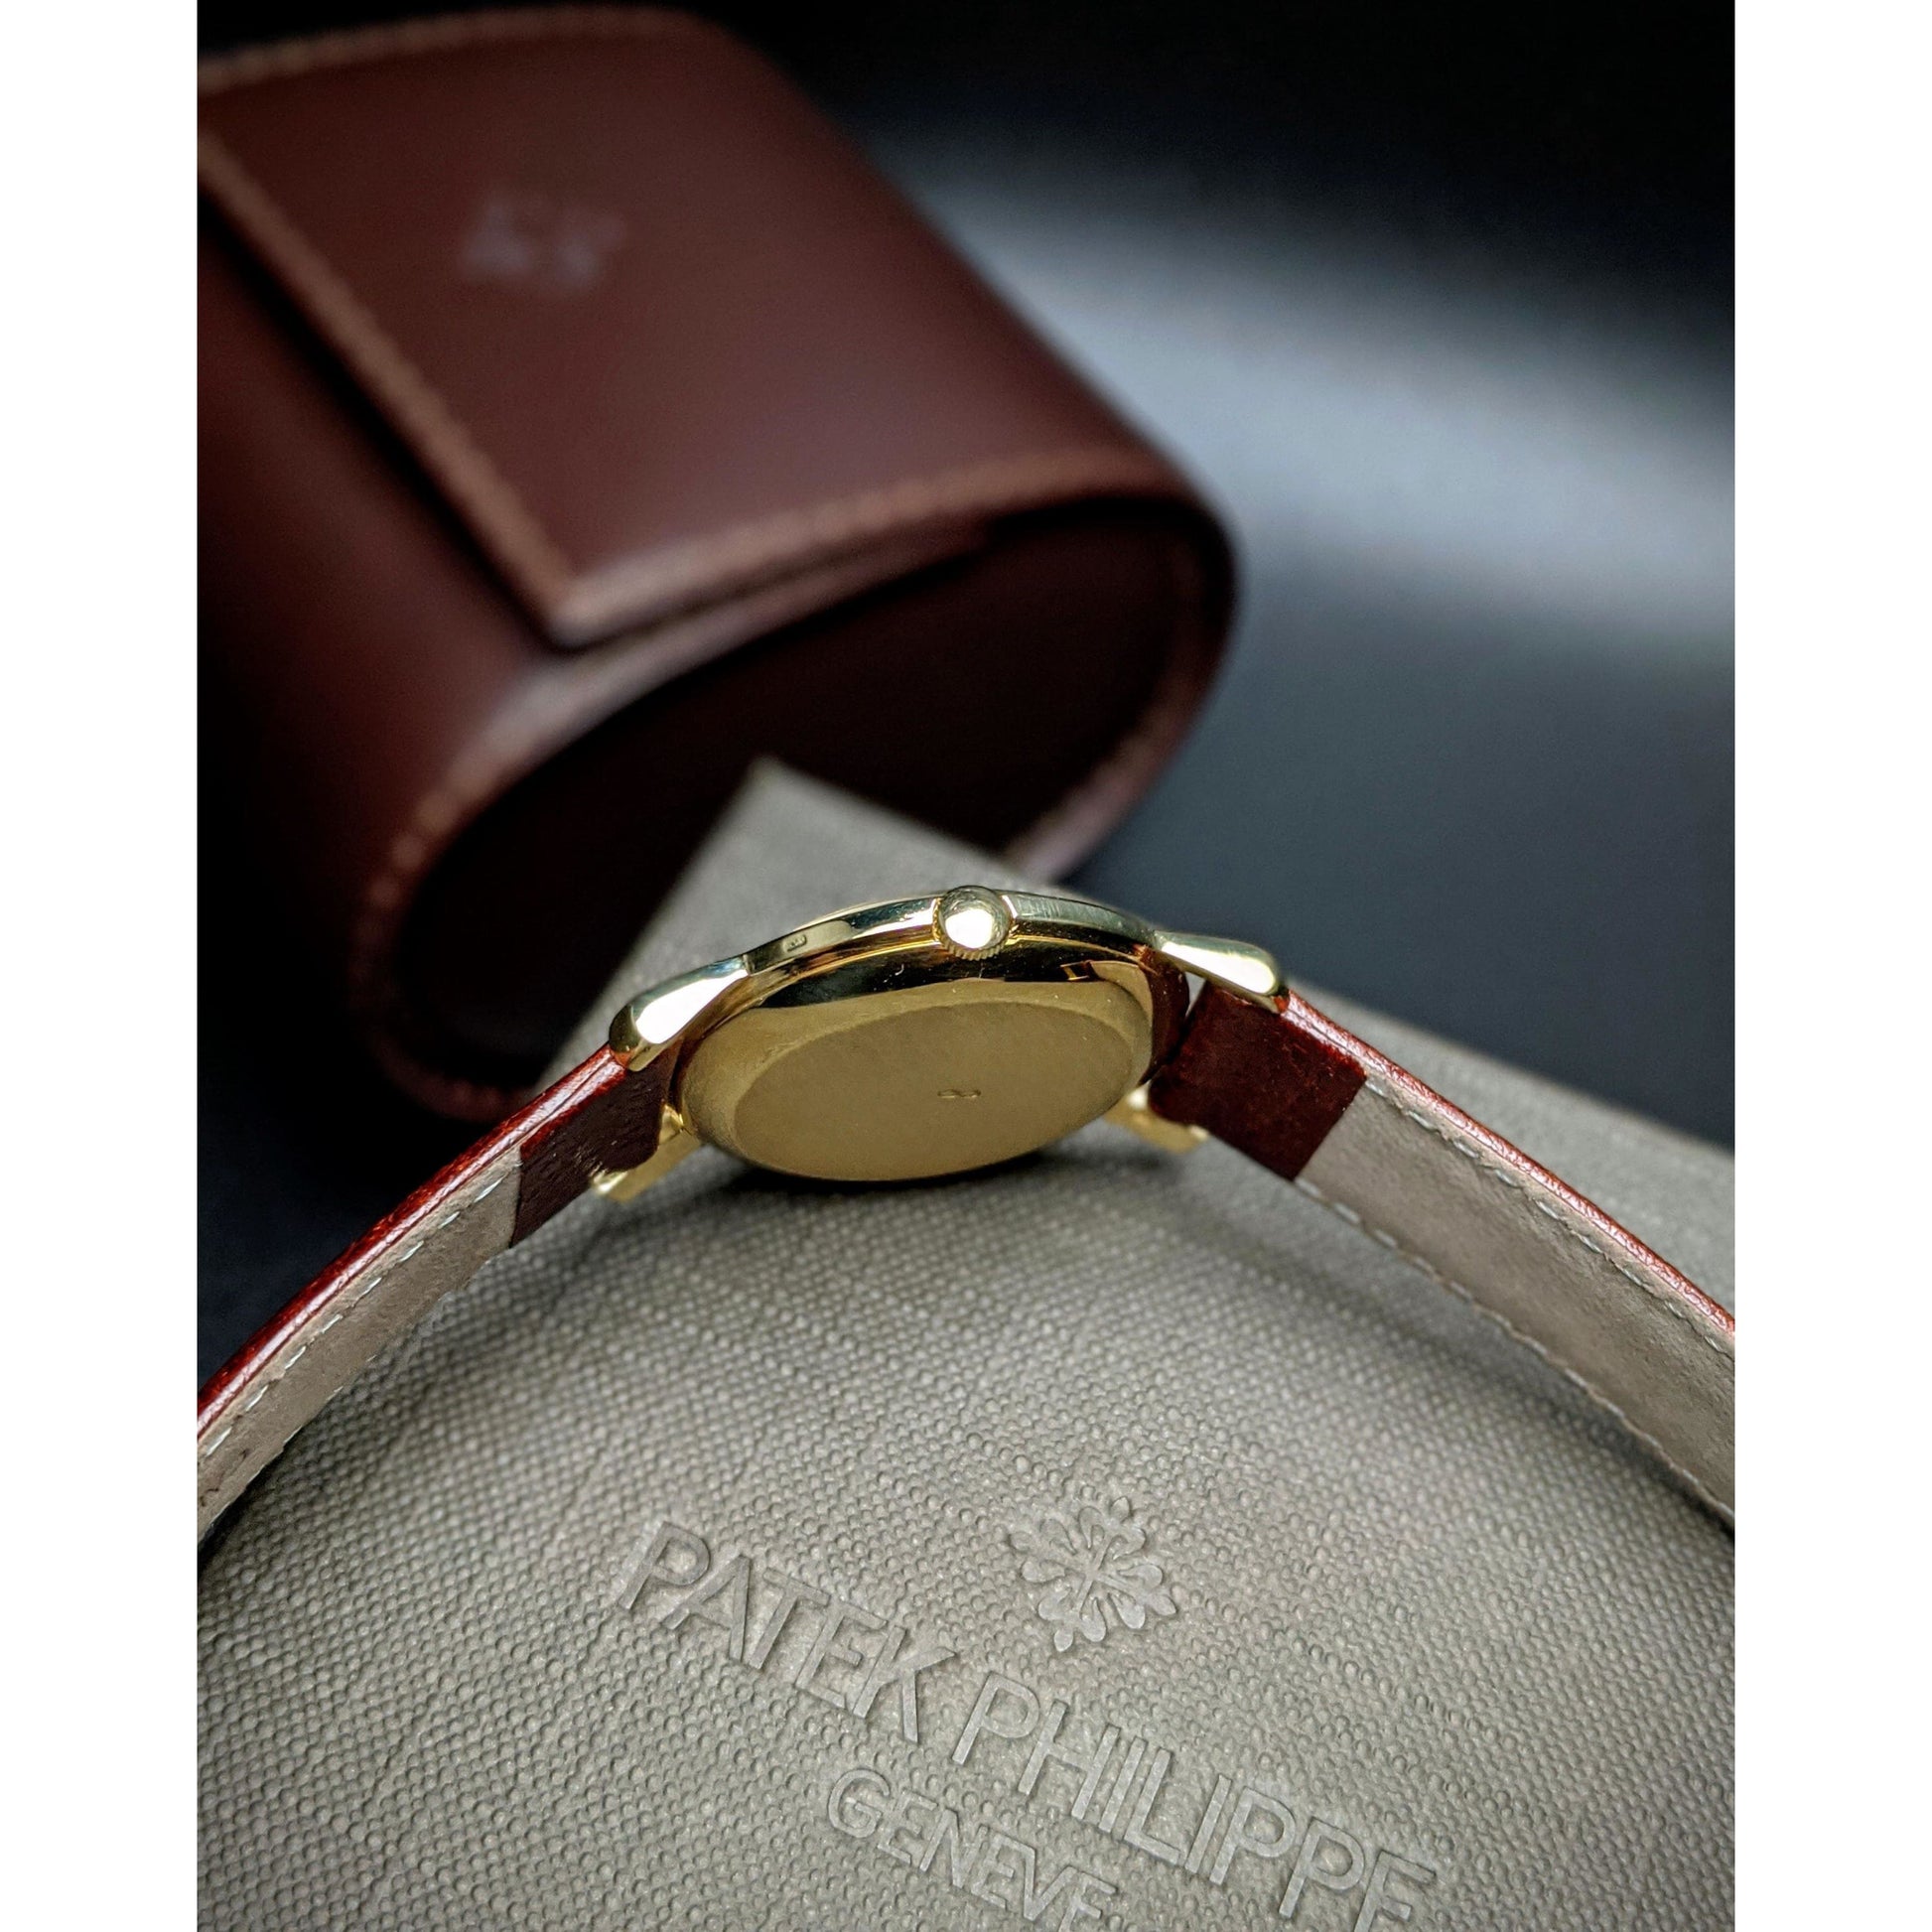 Patek Philippe Calatrava 18k Gold / very rare dial with silver ring/Patek Philippe Certificate and Box - E-V-W.com